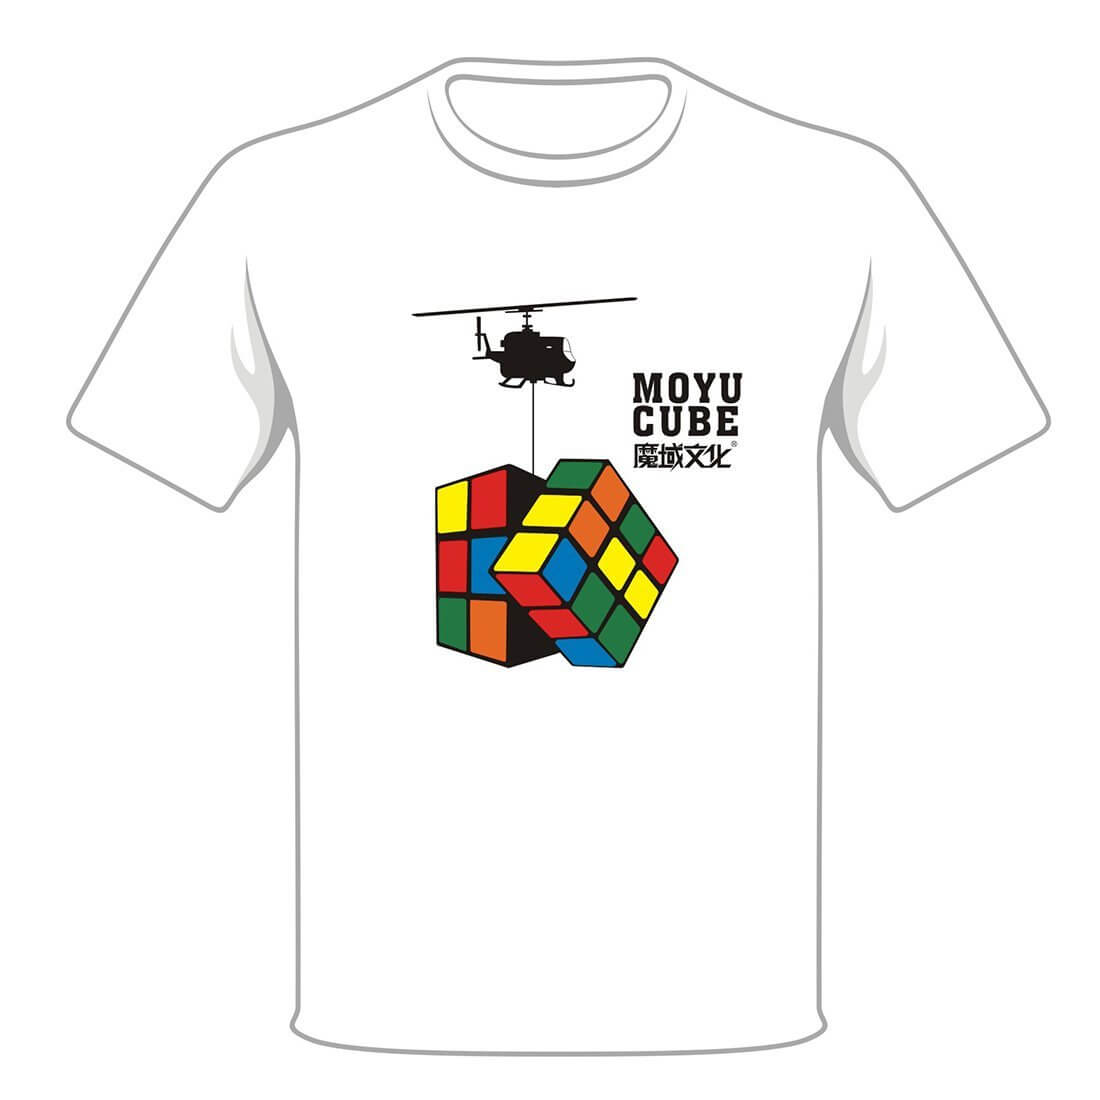 MOYU Men's T-shirt Short Sleeve with CUBE Pattern Printing FZ04 - White XXL